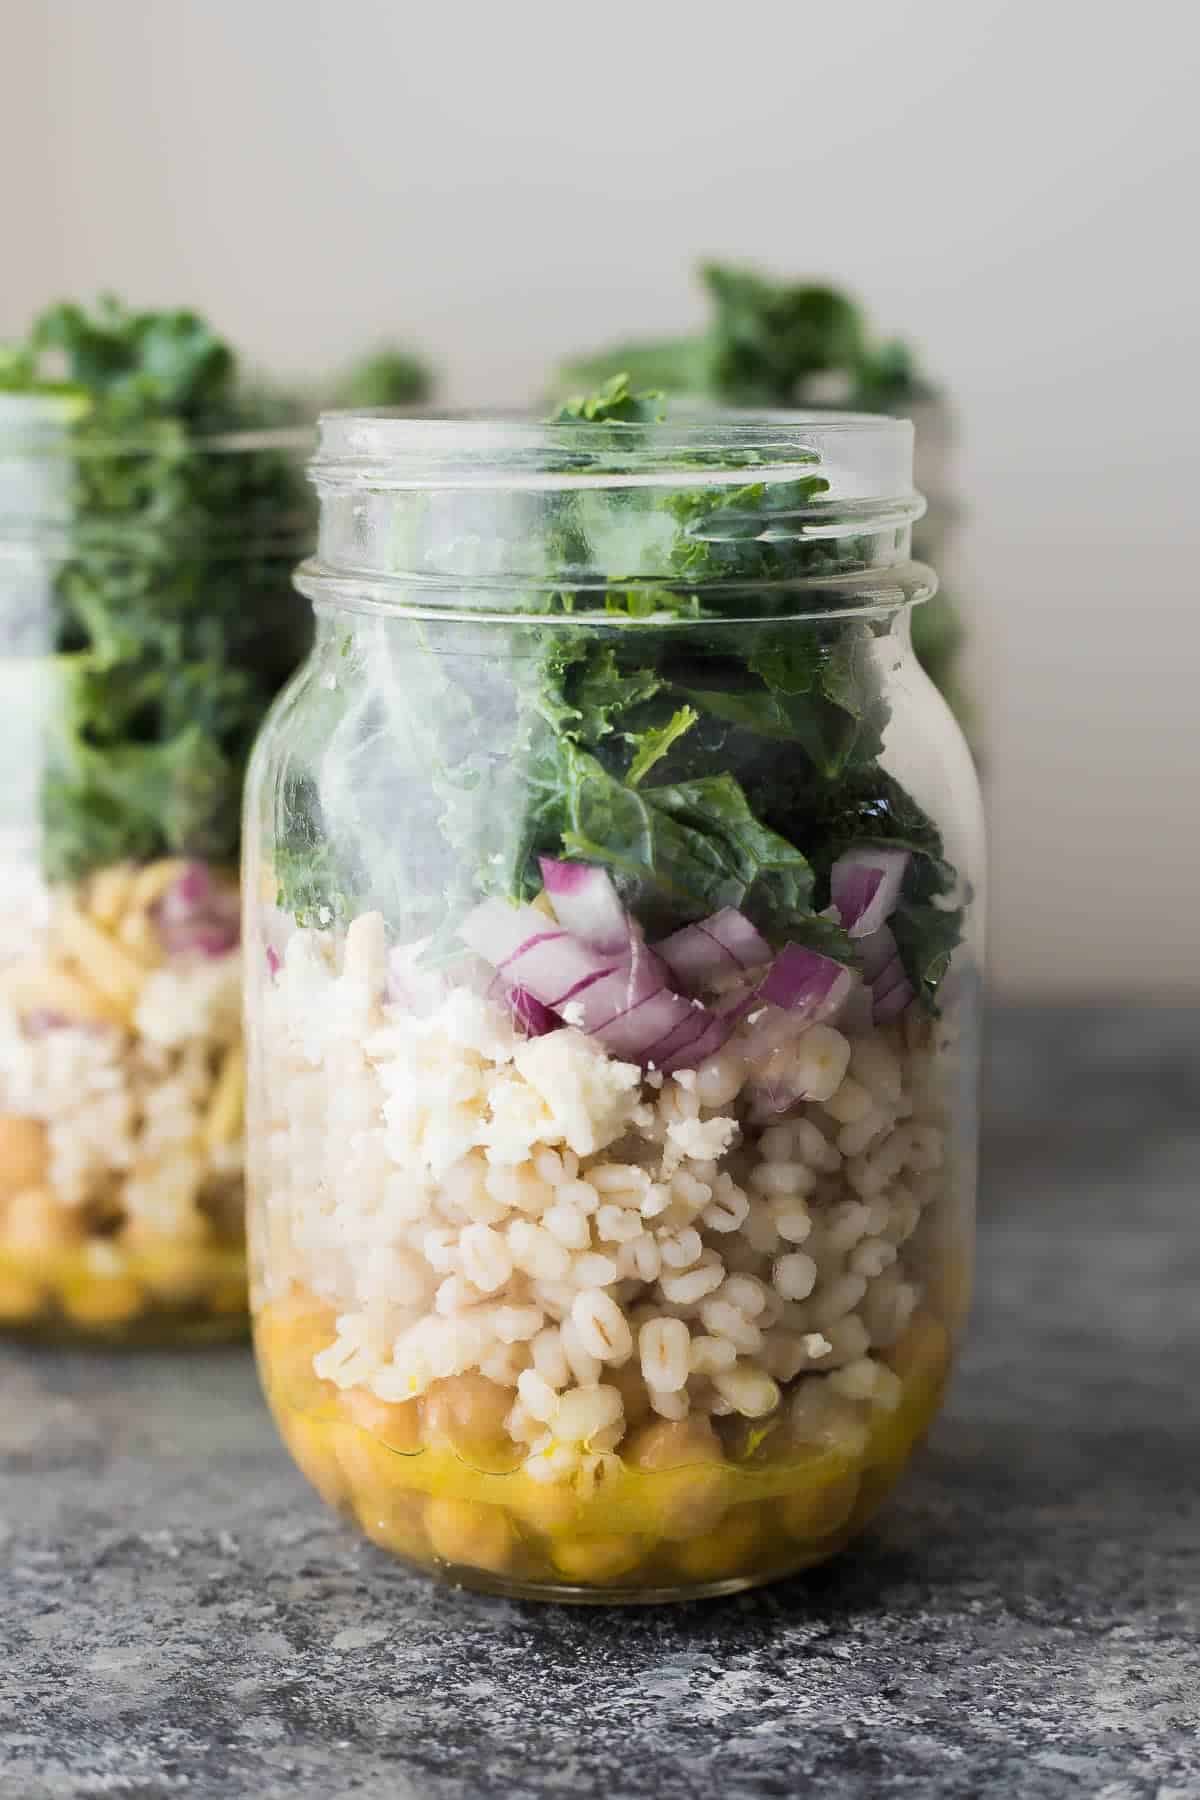 kale barley salad in jars for meal prep